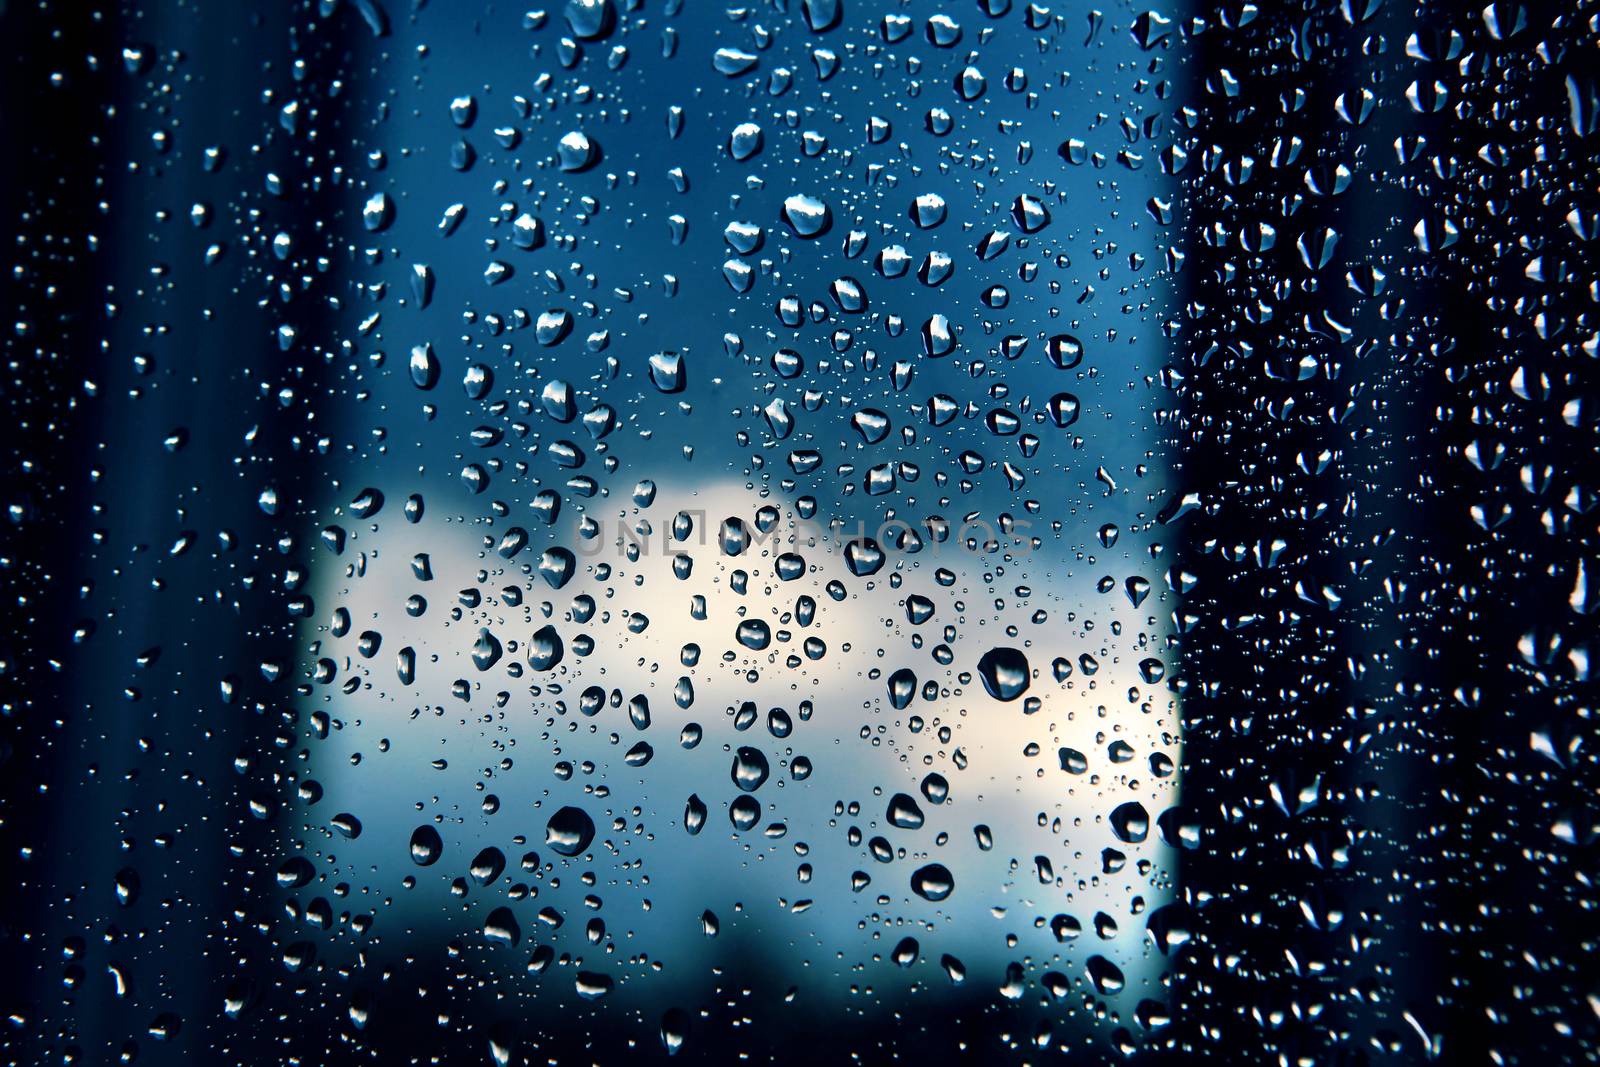 rain droplets on window by ssuaphoto